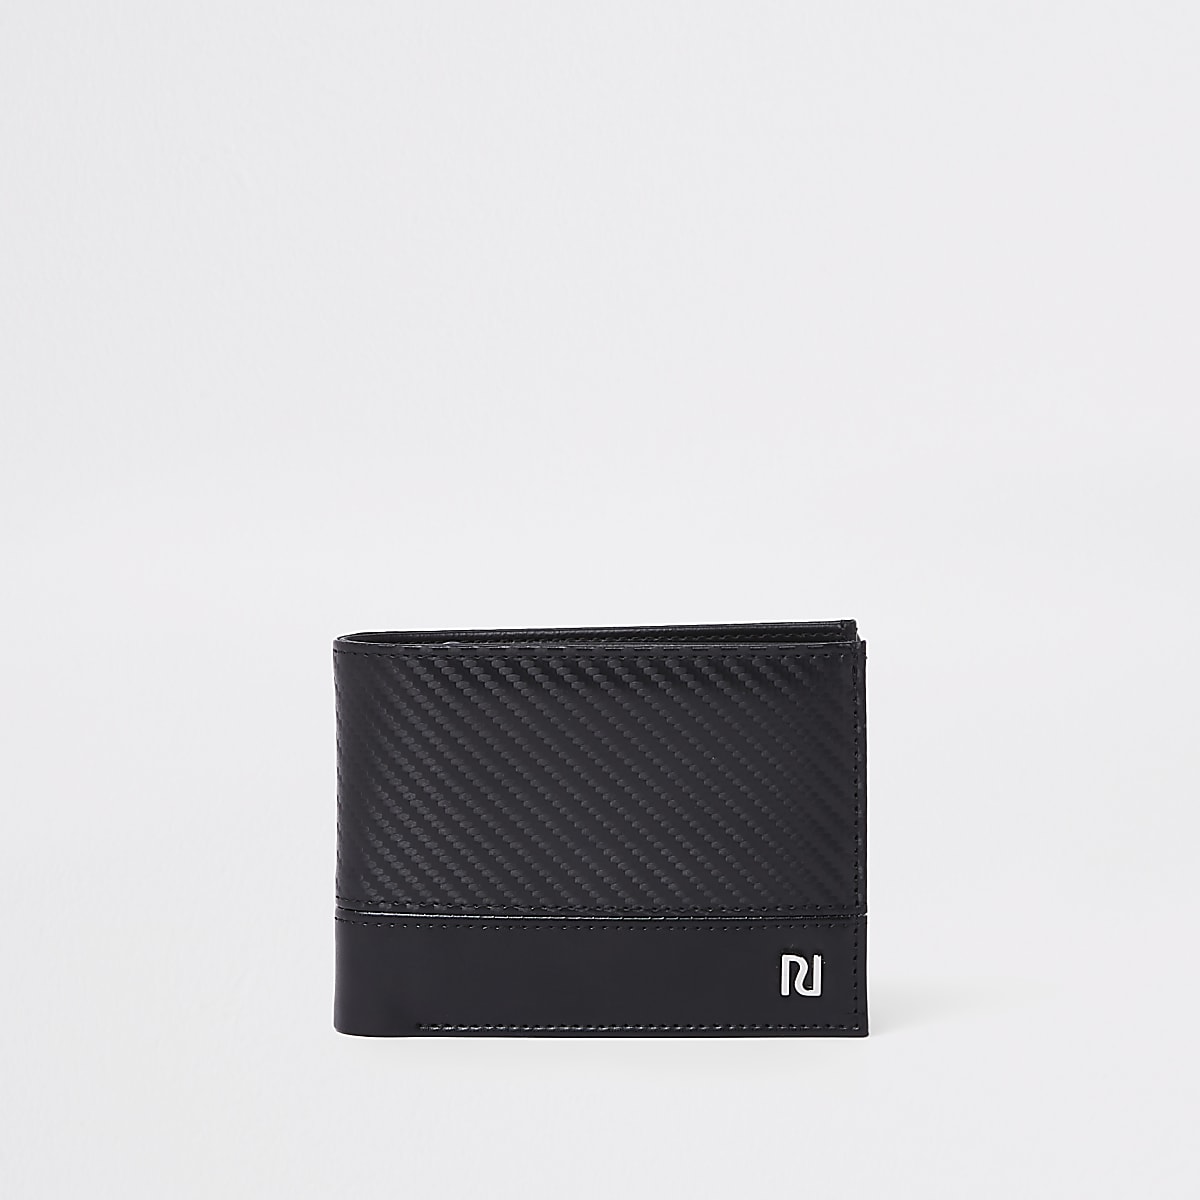 Black contrast texture wallet - Wallets - Accessories - men